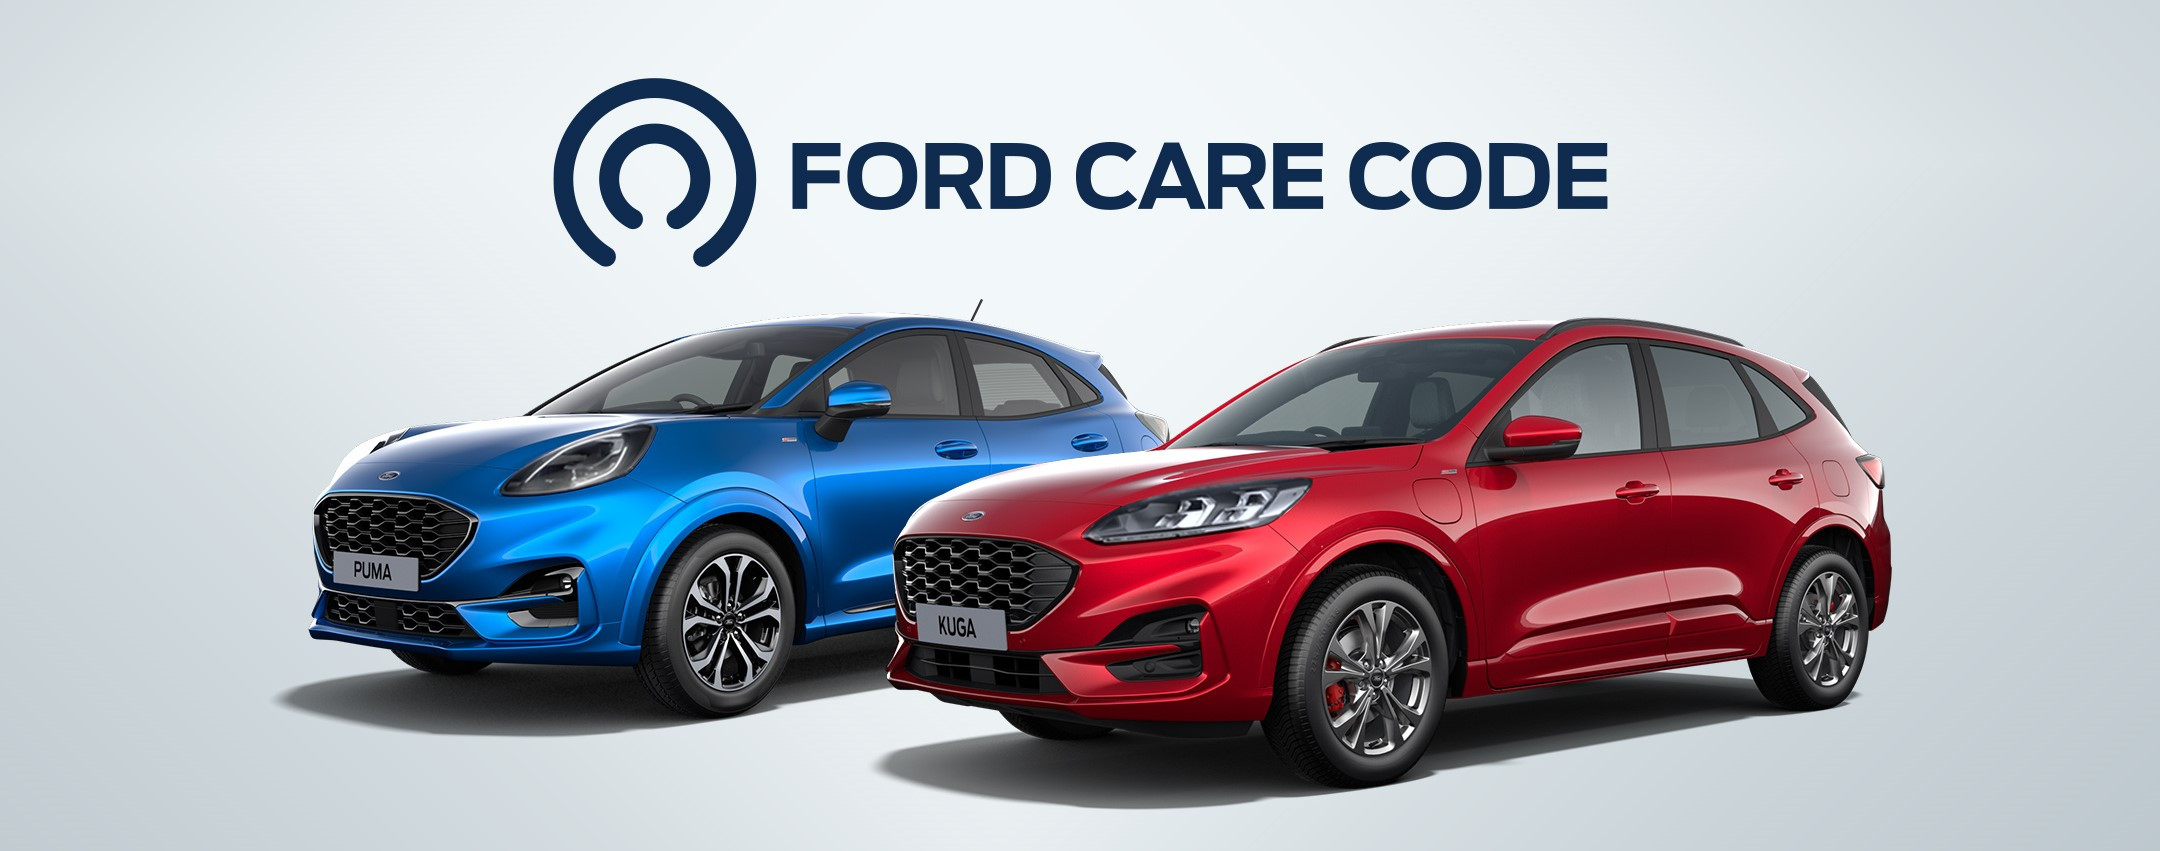 Ford Care Code: ανοιχτό το δίκτυο Ford – “έρχεται’ και στο σπίτι σας